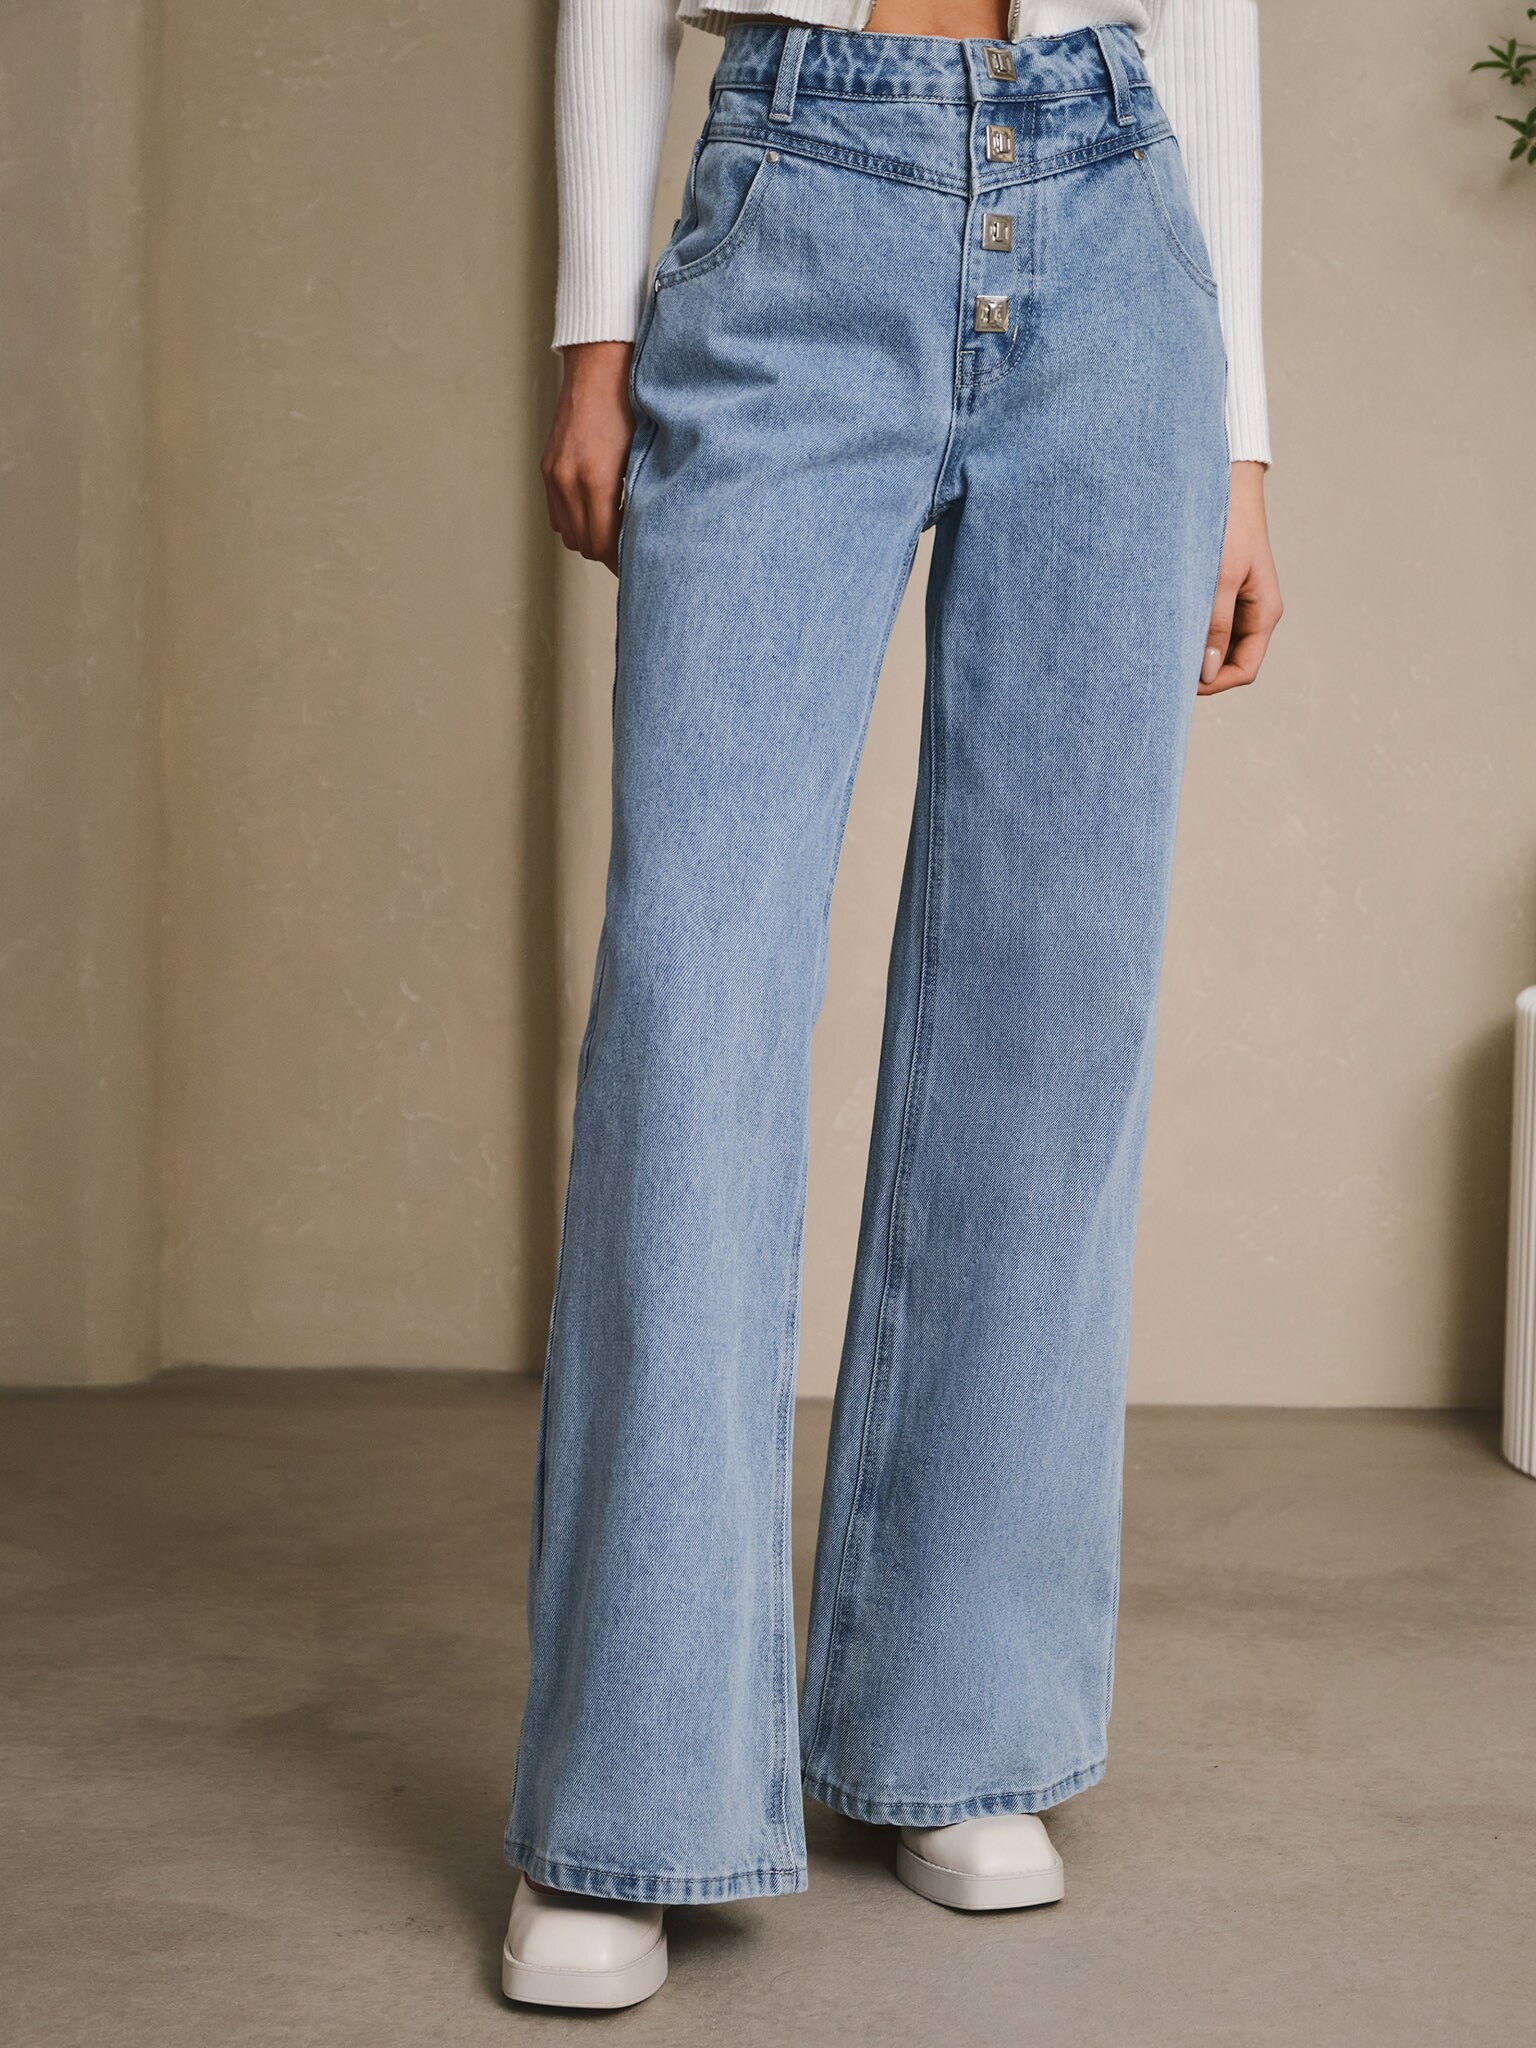 Discover more than 56 high waist denim jeans online super hot